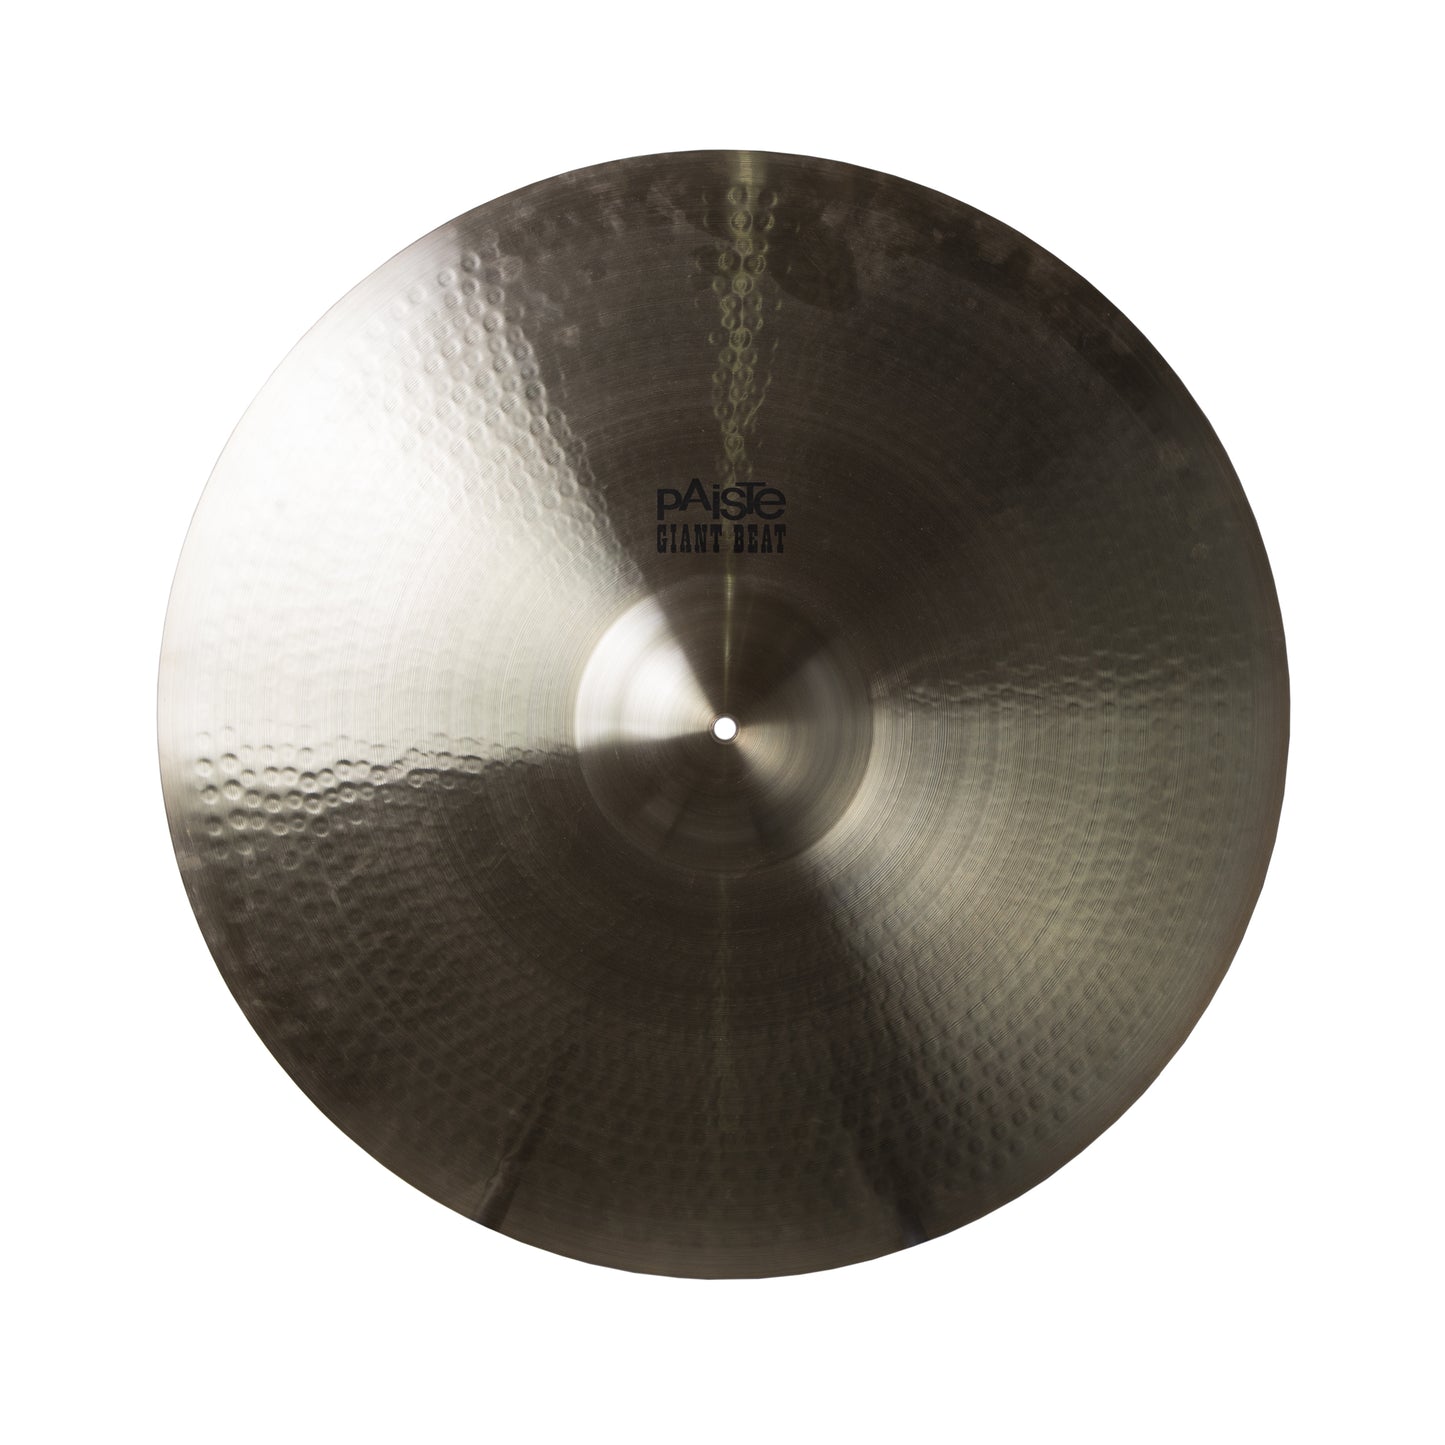 Paiste 24” Giant Beat Multifunction Cymbal